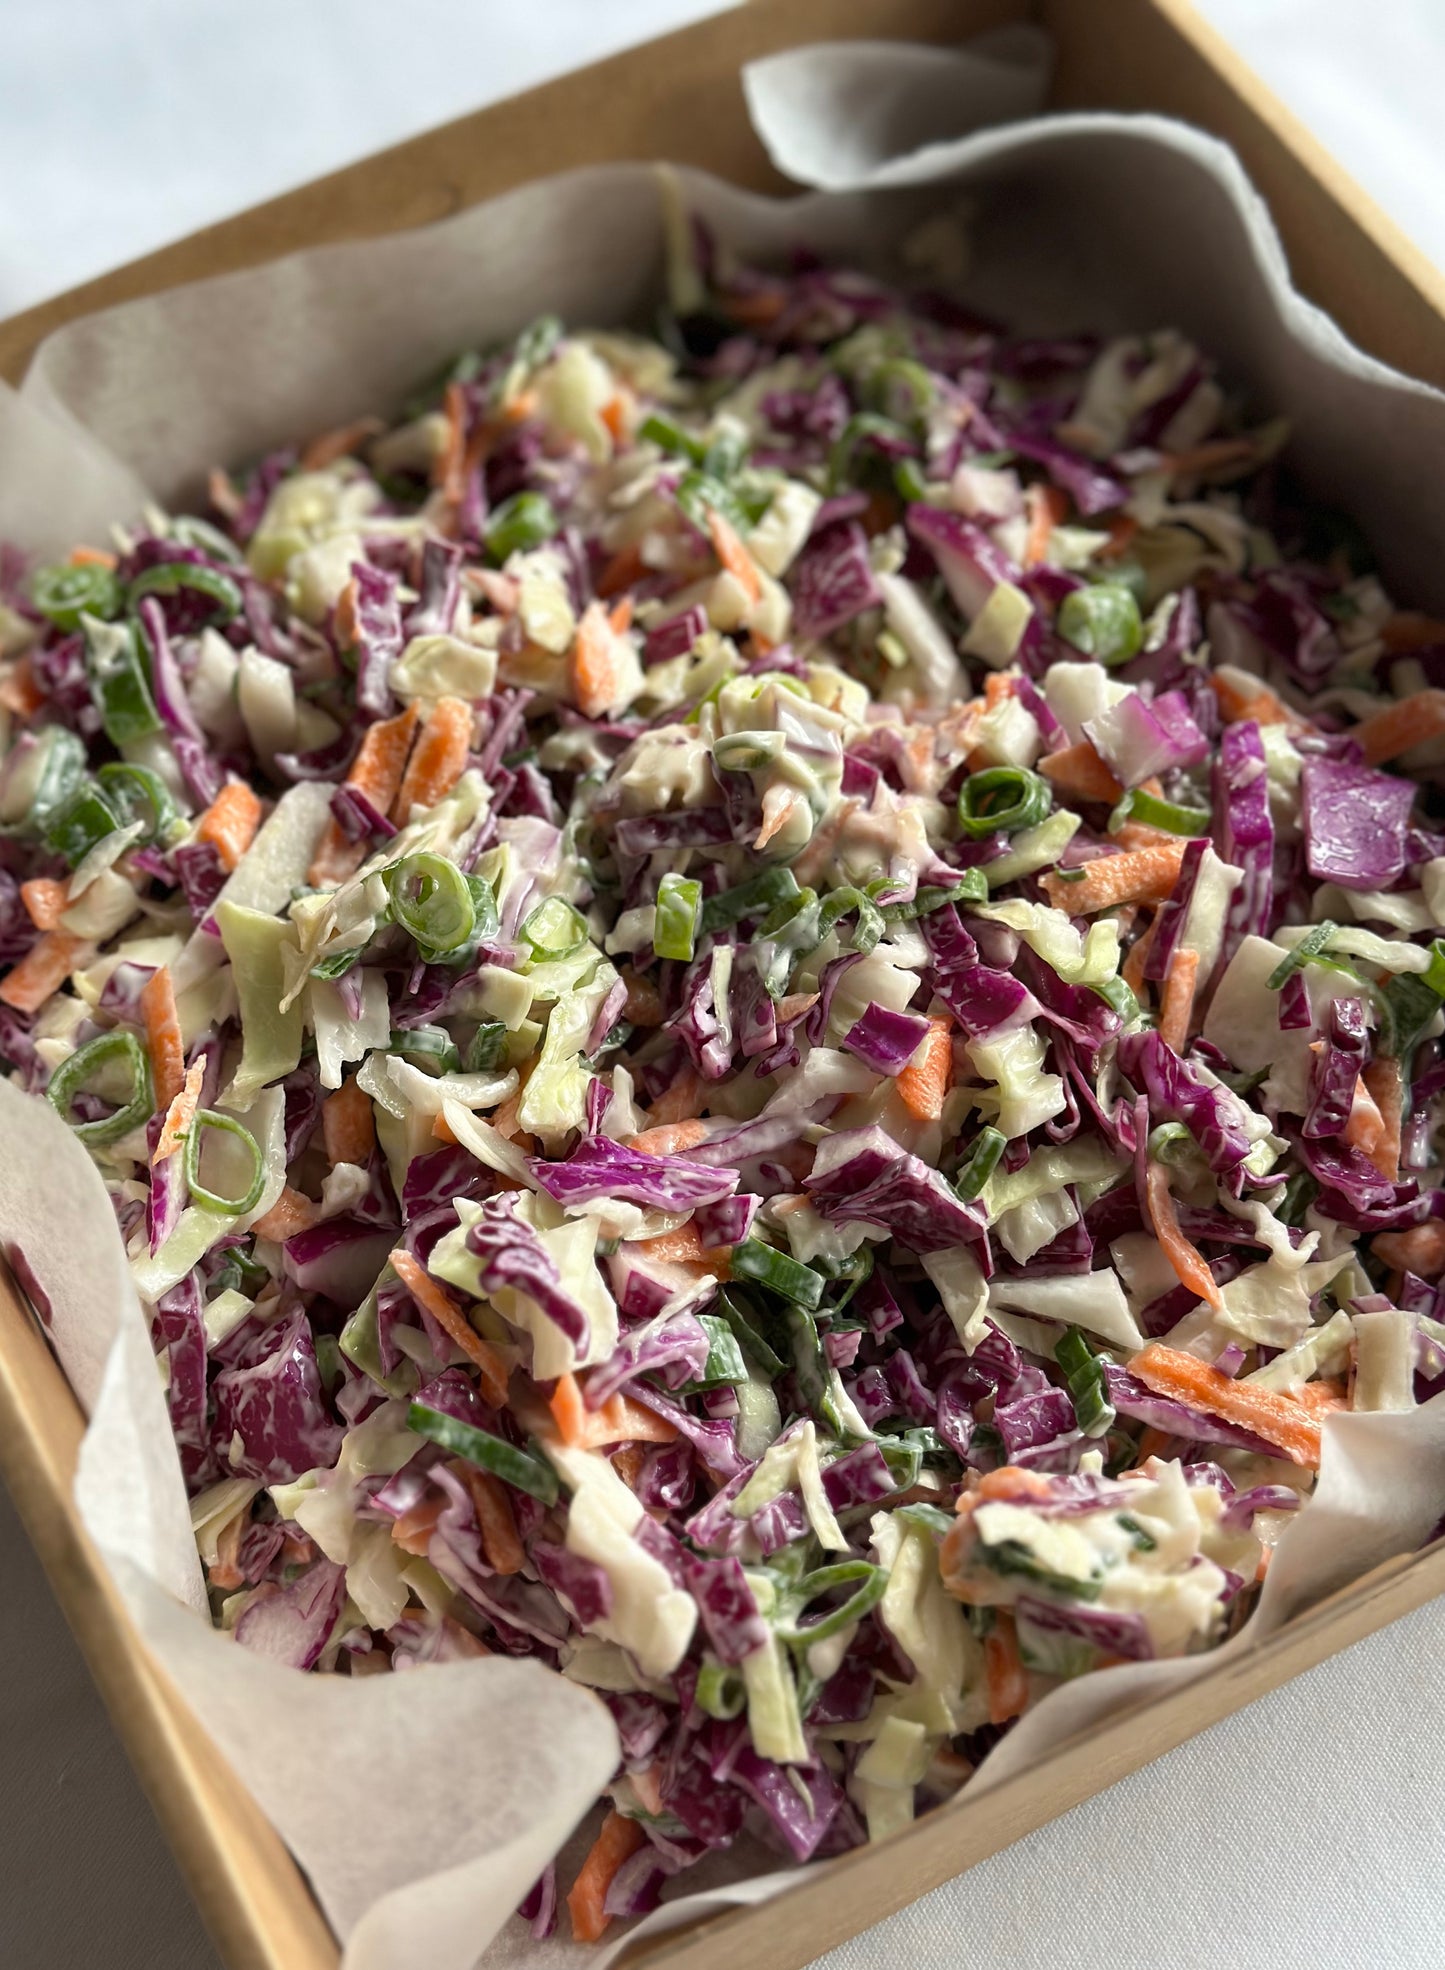 Salad - coleslaw